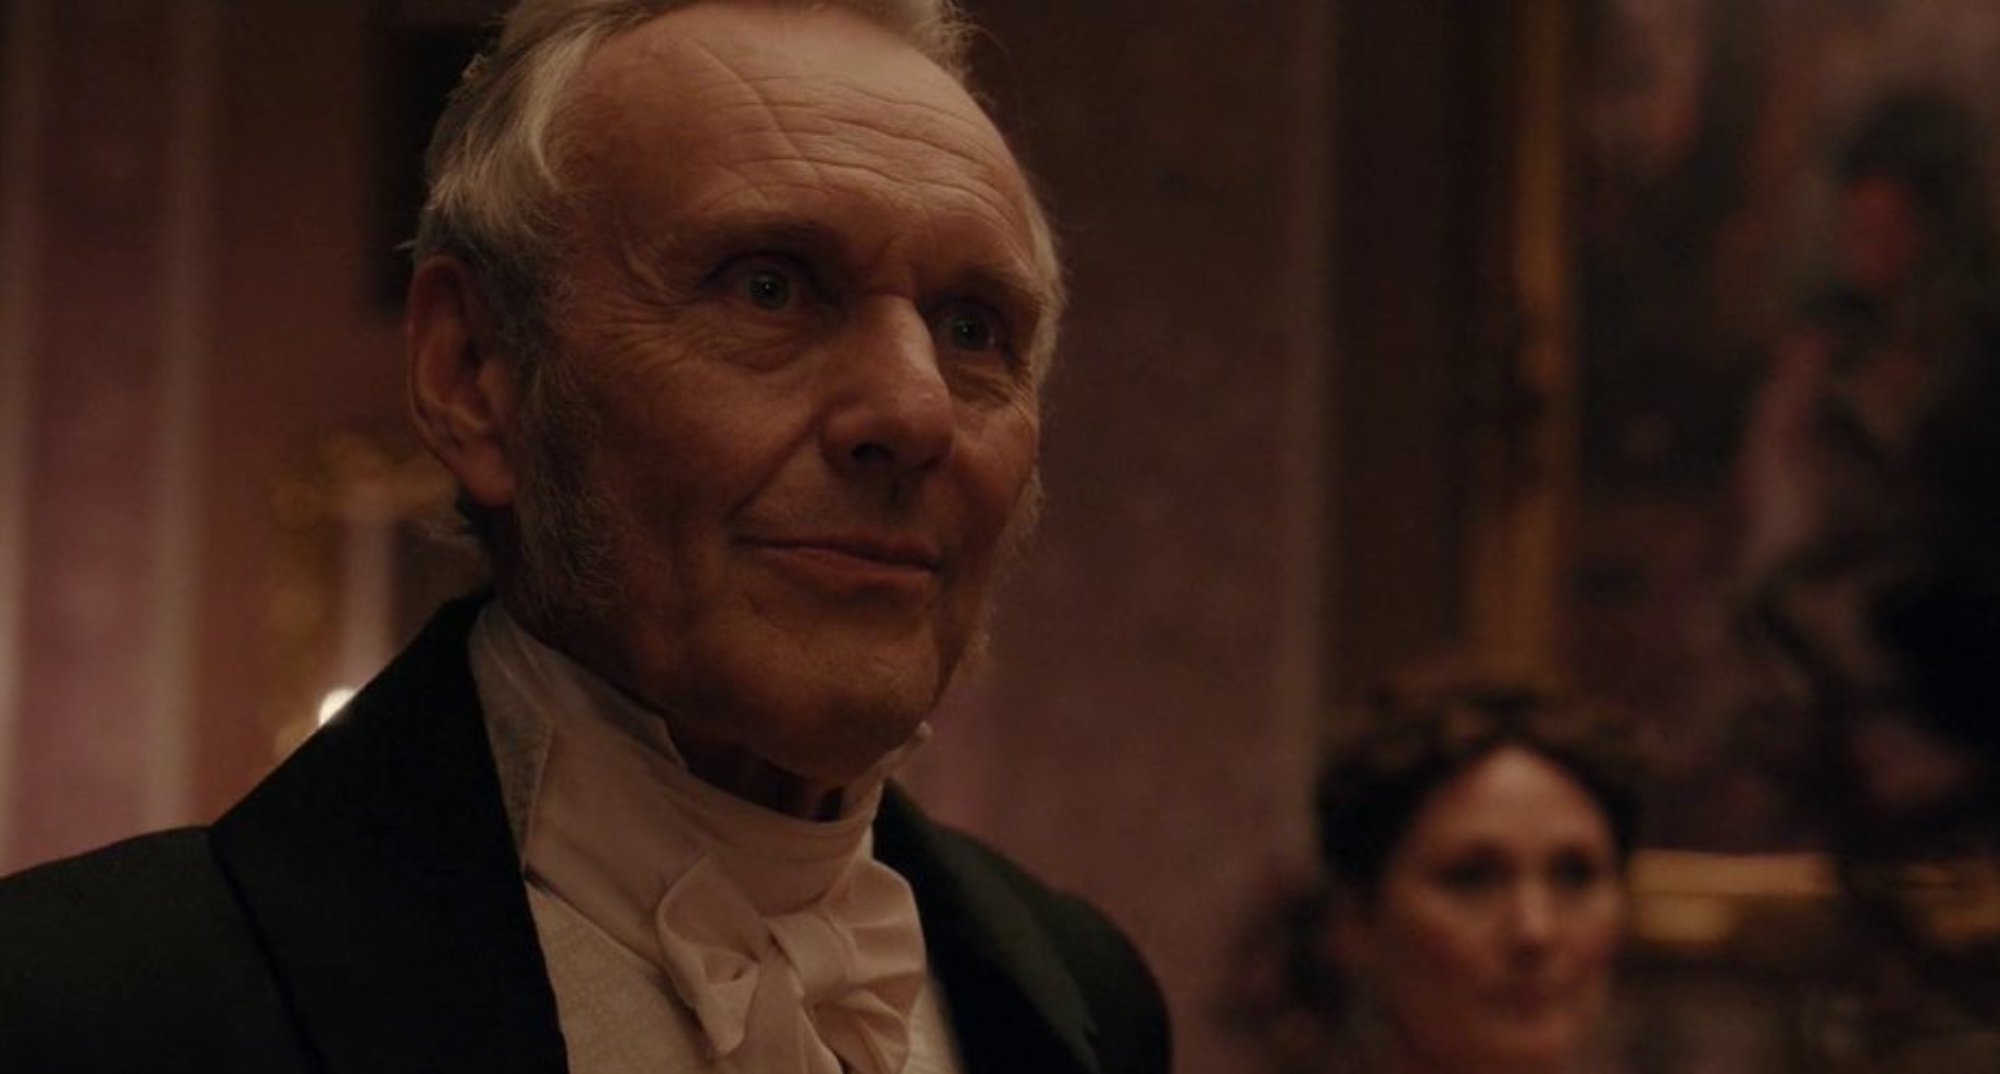 Lord Sheffield in 'Bridgerton' Season 2 wearing suit at dinner.